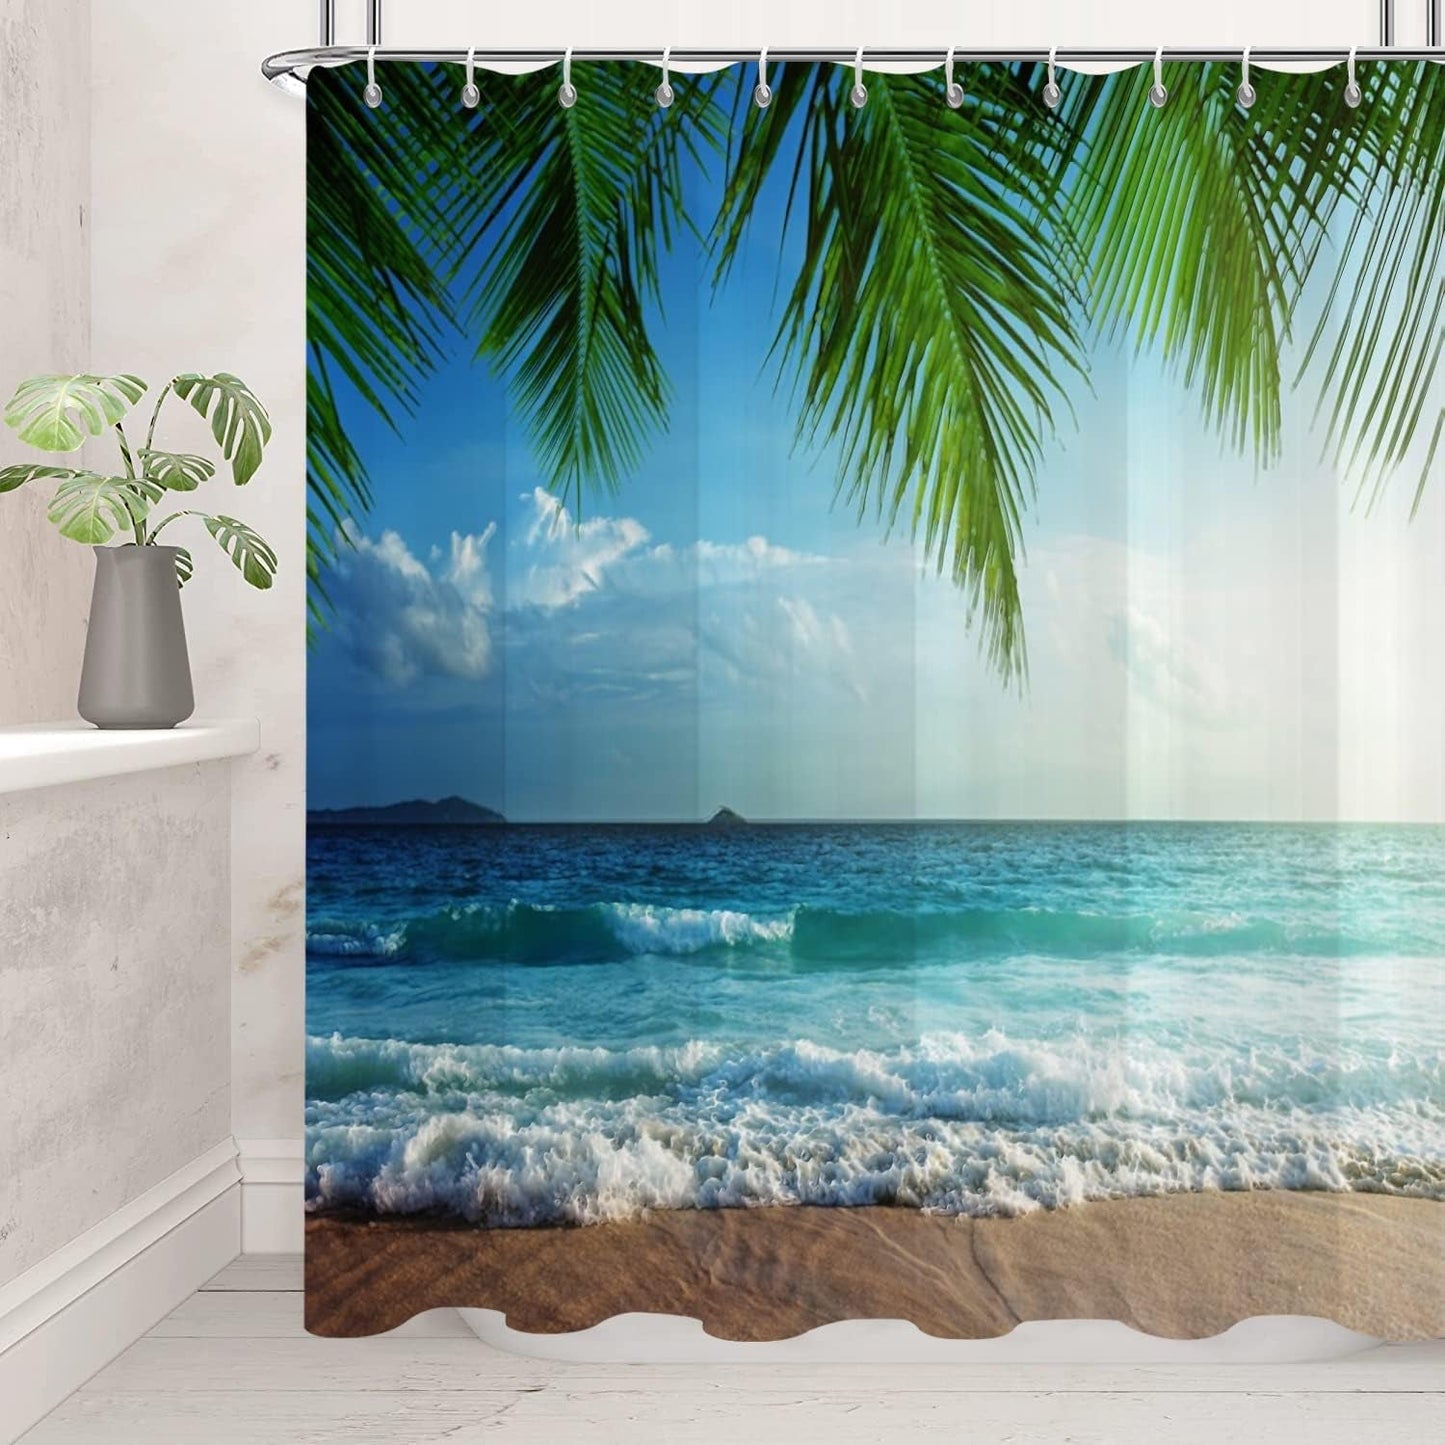 GCIREC Ocean Shower Curtain, Summer Tropical Palms Maldives Island Beach Sea Landscape Bathroom Curtain Waterproof Fabric Machine Washable with 12 Hooks